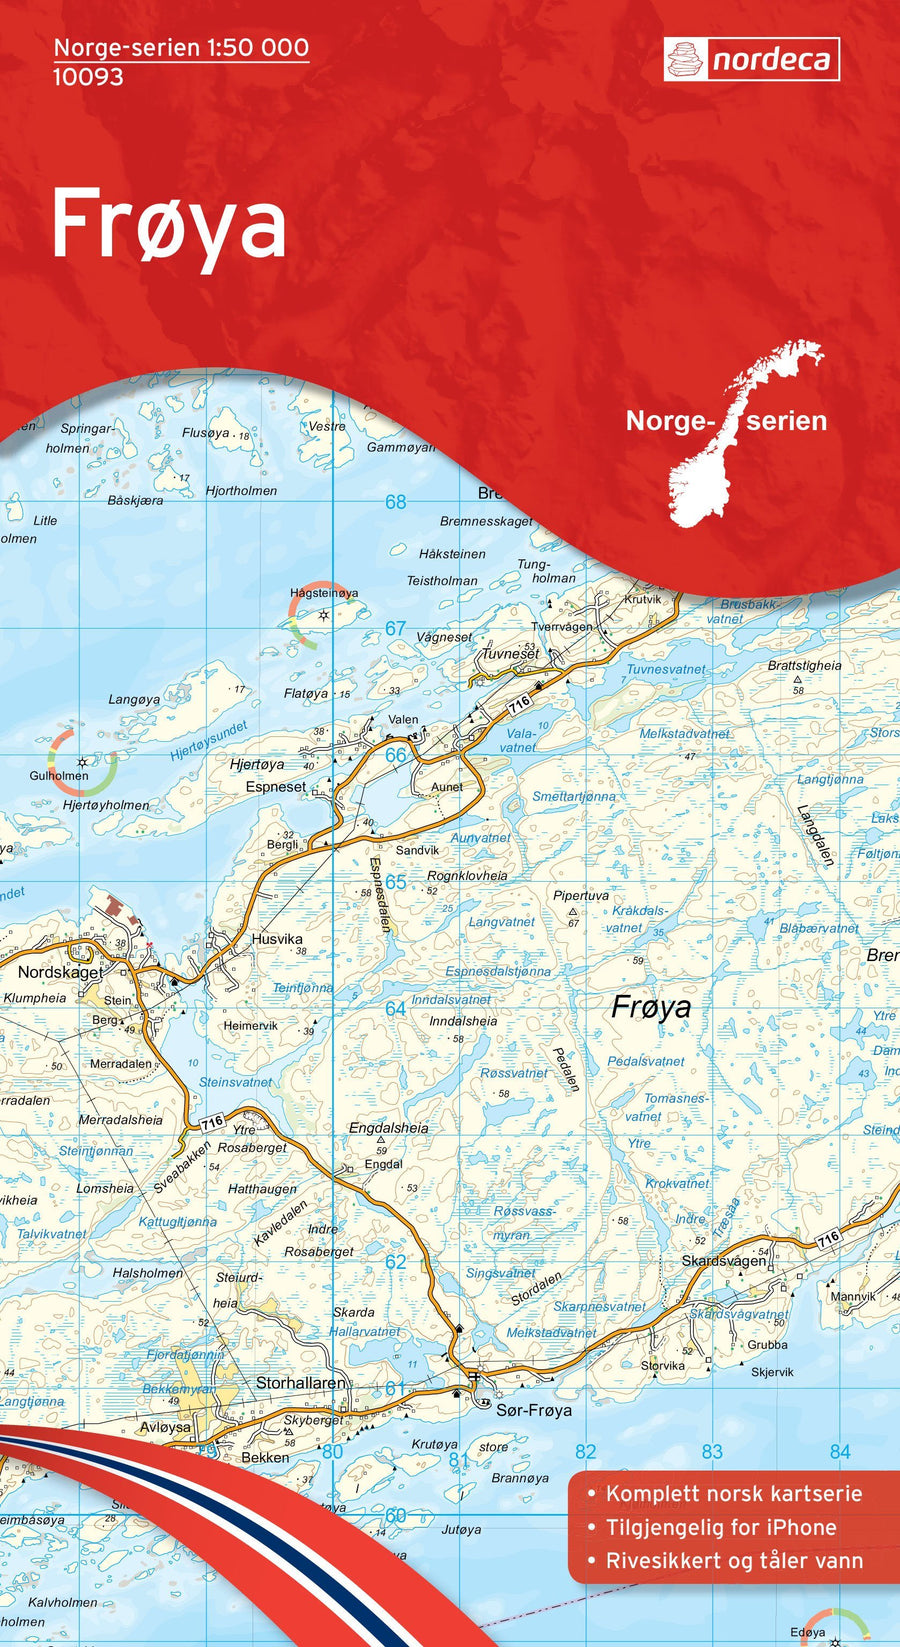 Carte de randonnée n° 10093 - Froya (Norvège) | Nordeca - Norge-serien carte pliée Nordeca 